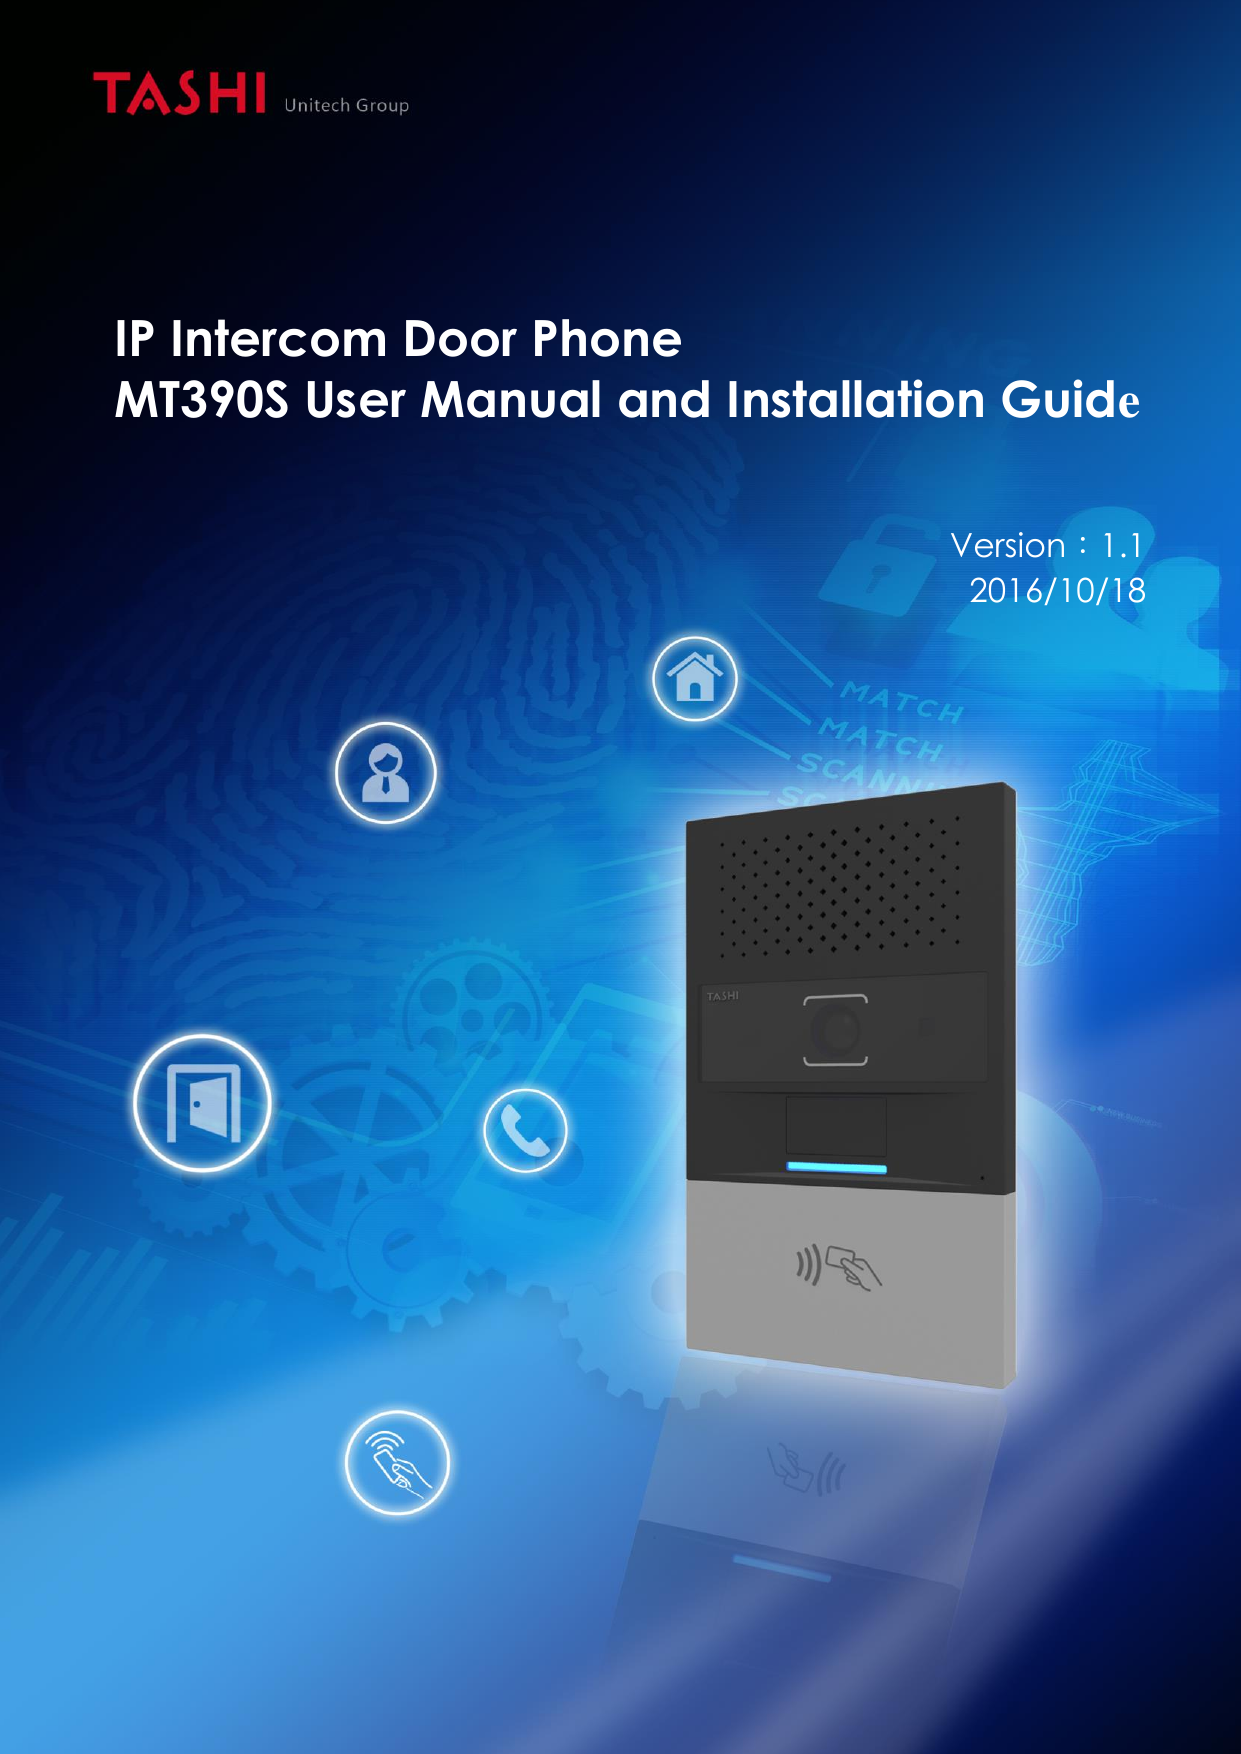   Unitech Group  1 TASHI Smartech Co., Ltd.      Unitech Group 3F., No. 188, Baoqiao Rd., Xindian Dist., New Taipei City 231,Taiwan, R.O.C. Tel: +886-2-8912-1268              Fax: +886-2-2911-3918            TASHI Website: www.tashi.ute.com           Version：1.1 2016/10/18  IP Intercom Door Phone MT390S User Manual and Installation Guide  